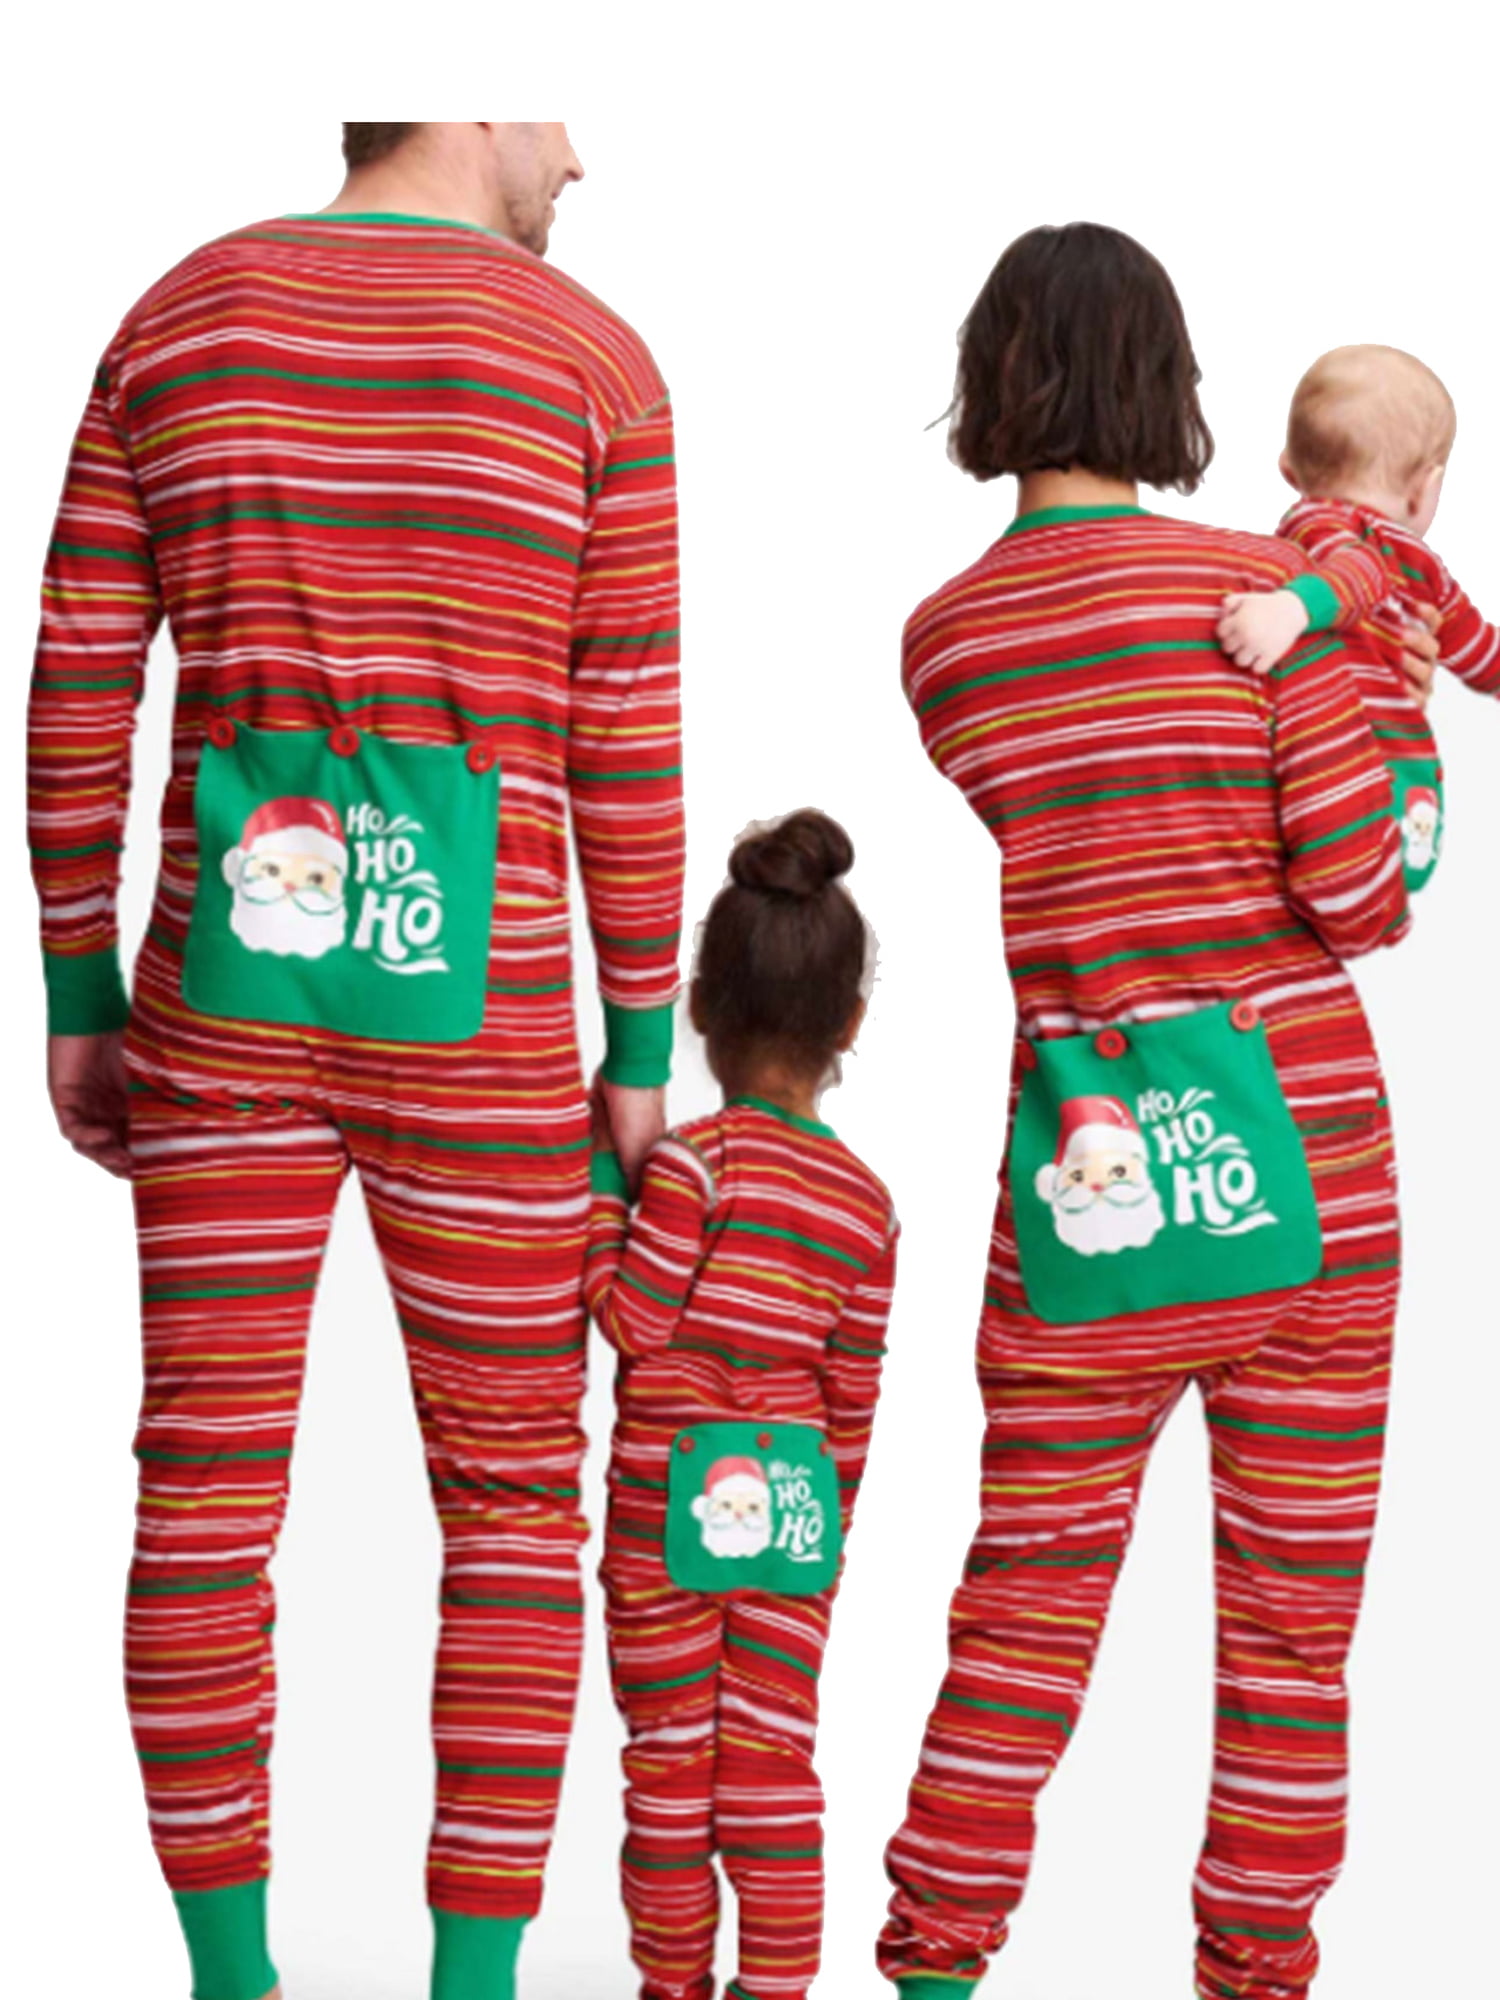 Playstation PS5 boys pyjamas Official Merchandise Christmas Xmas Kids PJ'S 